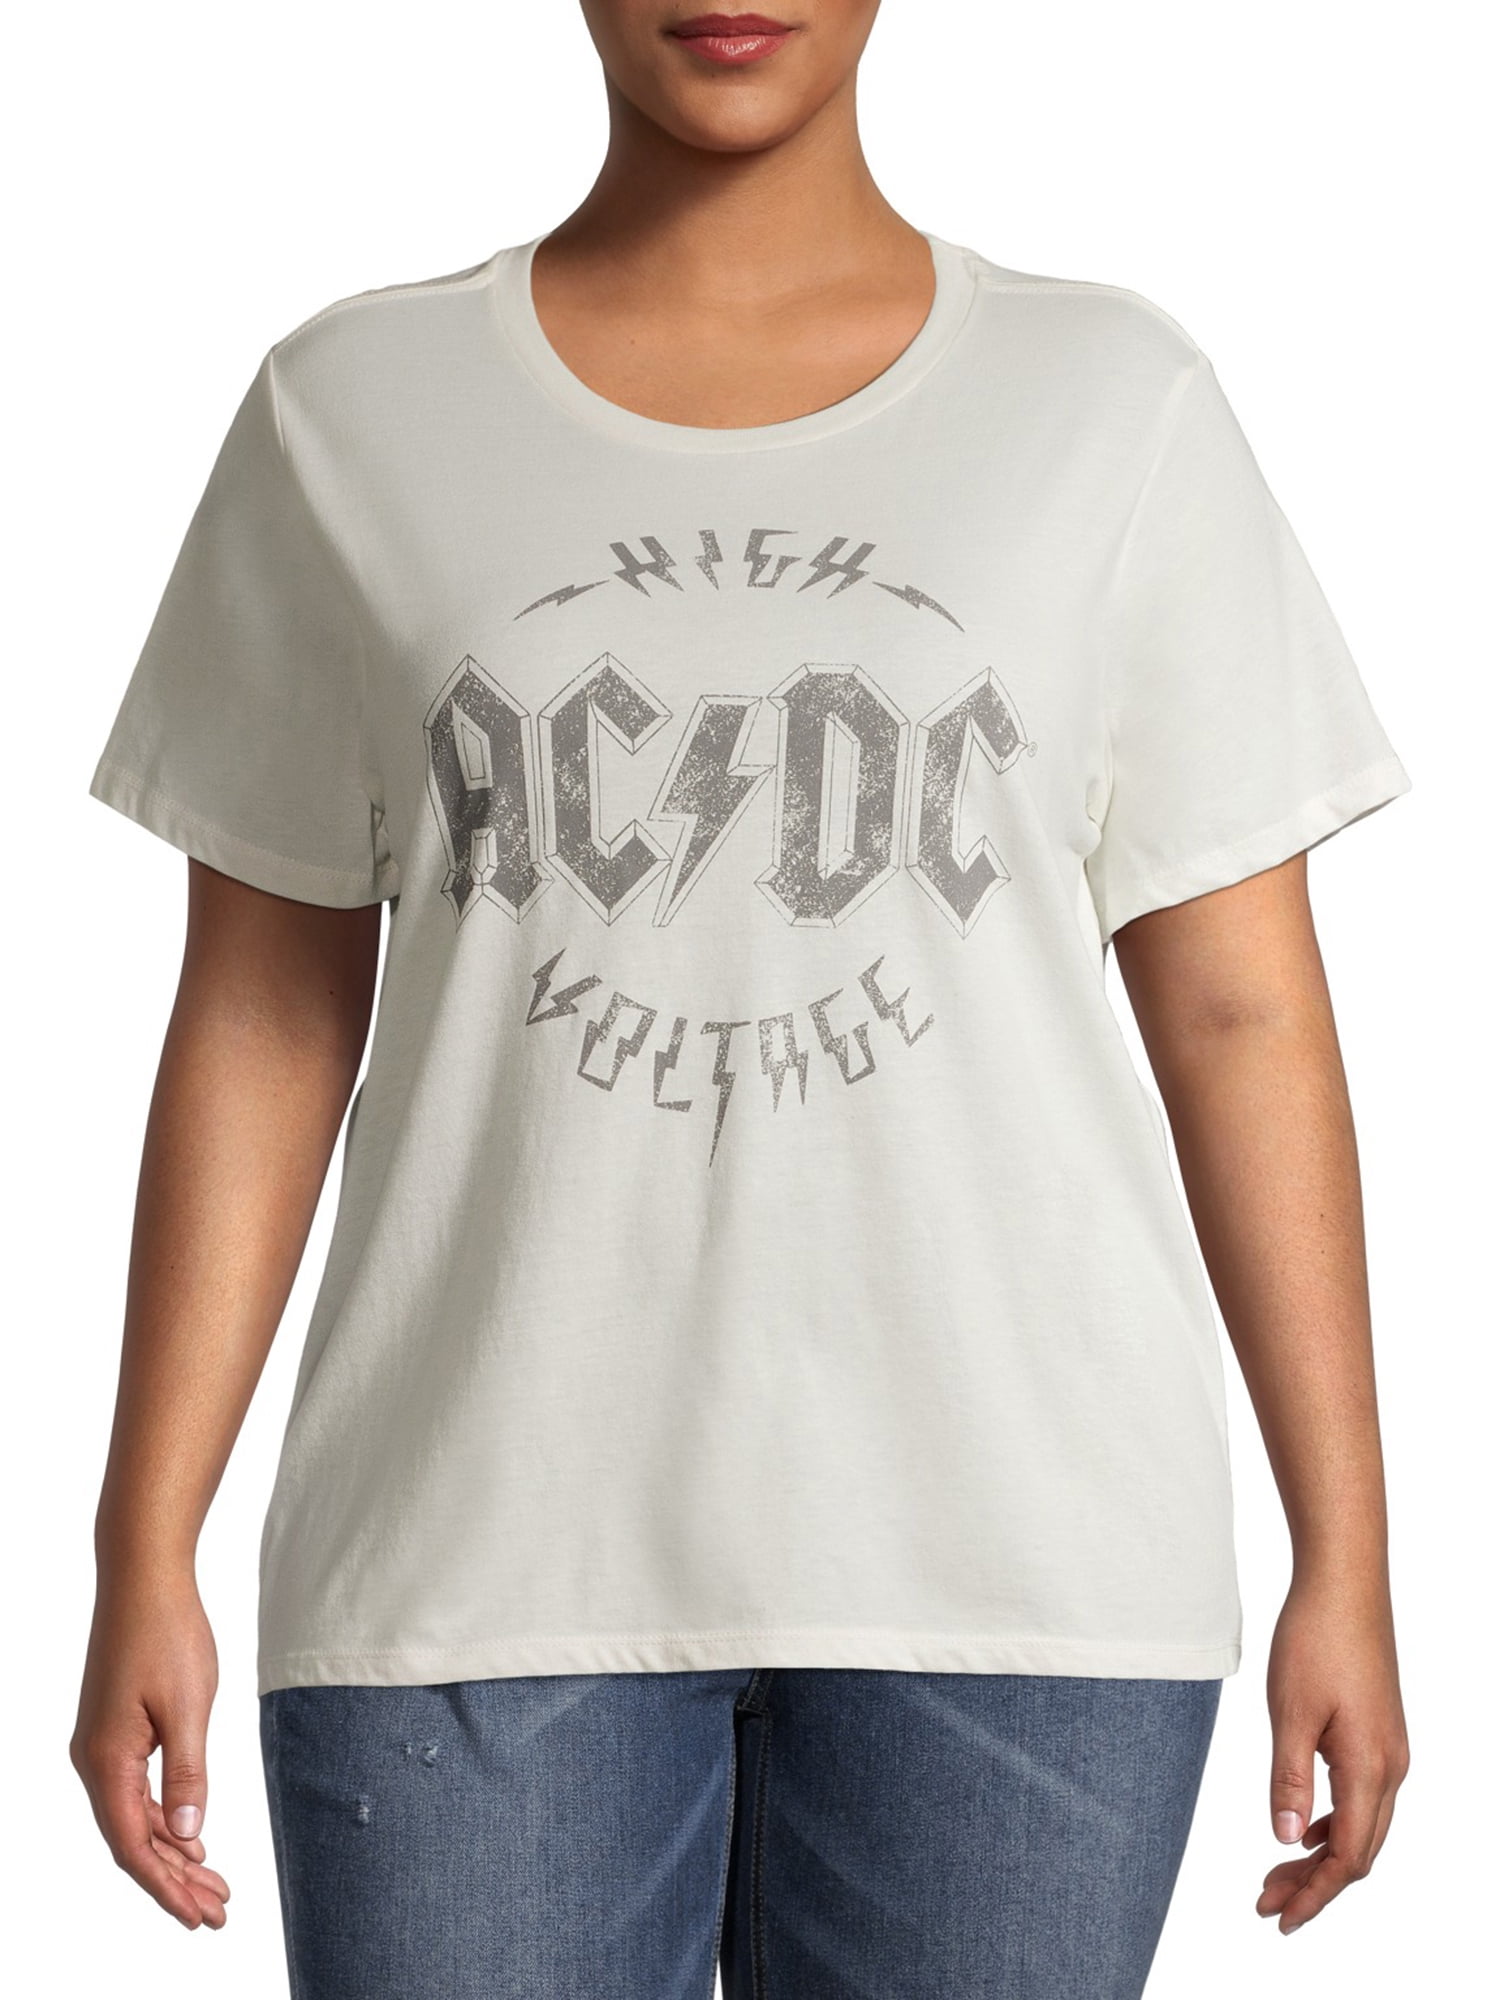 acdc t-shirt long sleeve kid model:5 ac dc children blouse kid shirt size:3-11y 